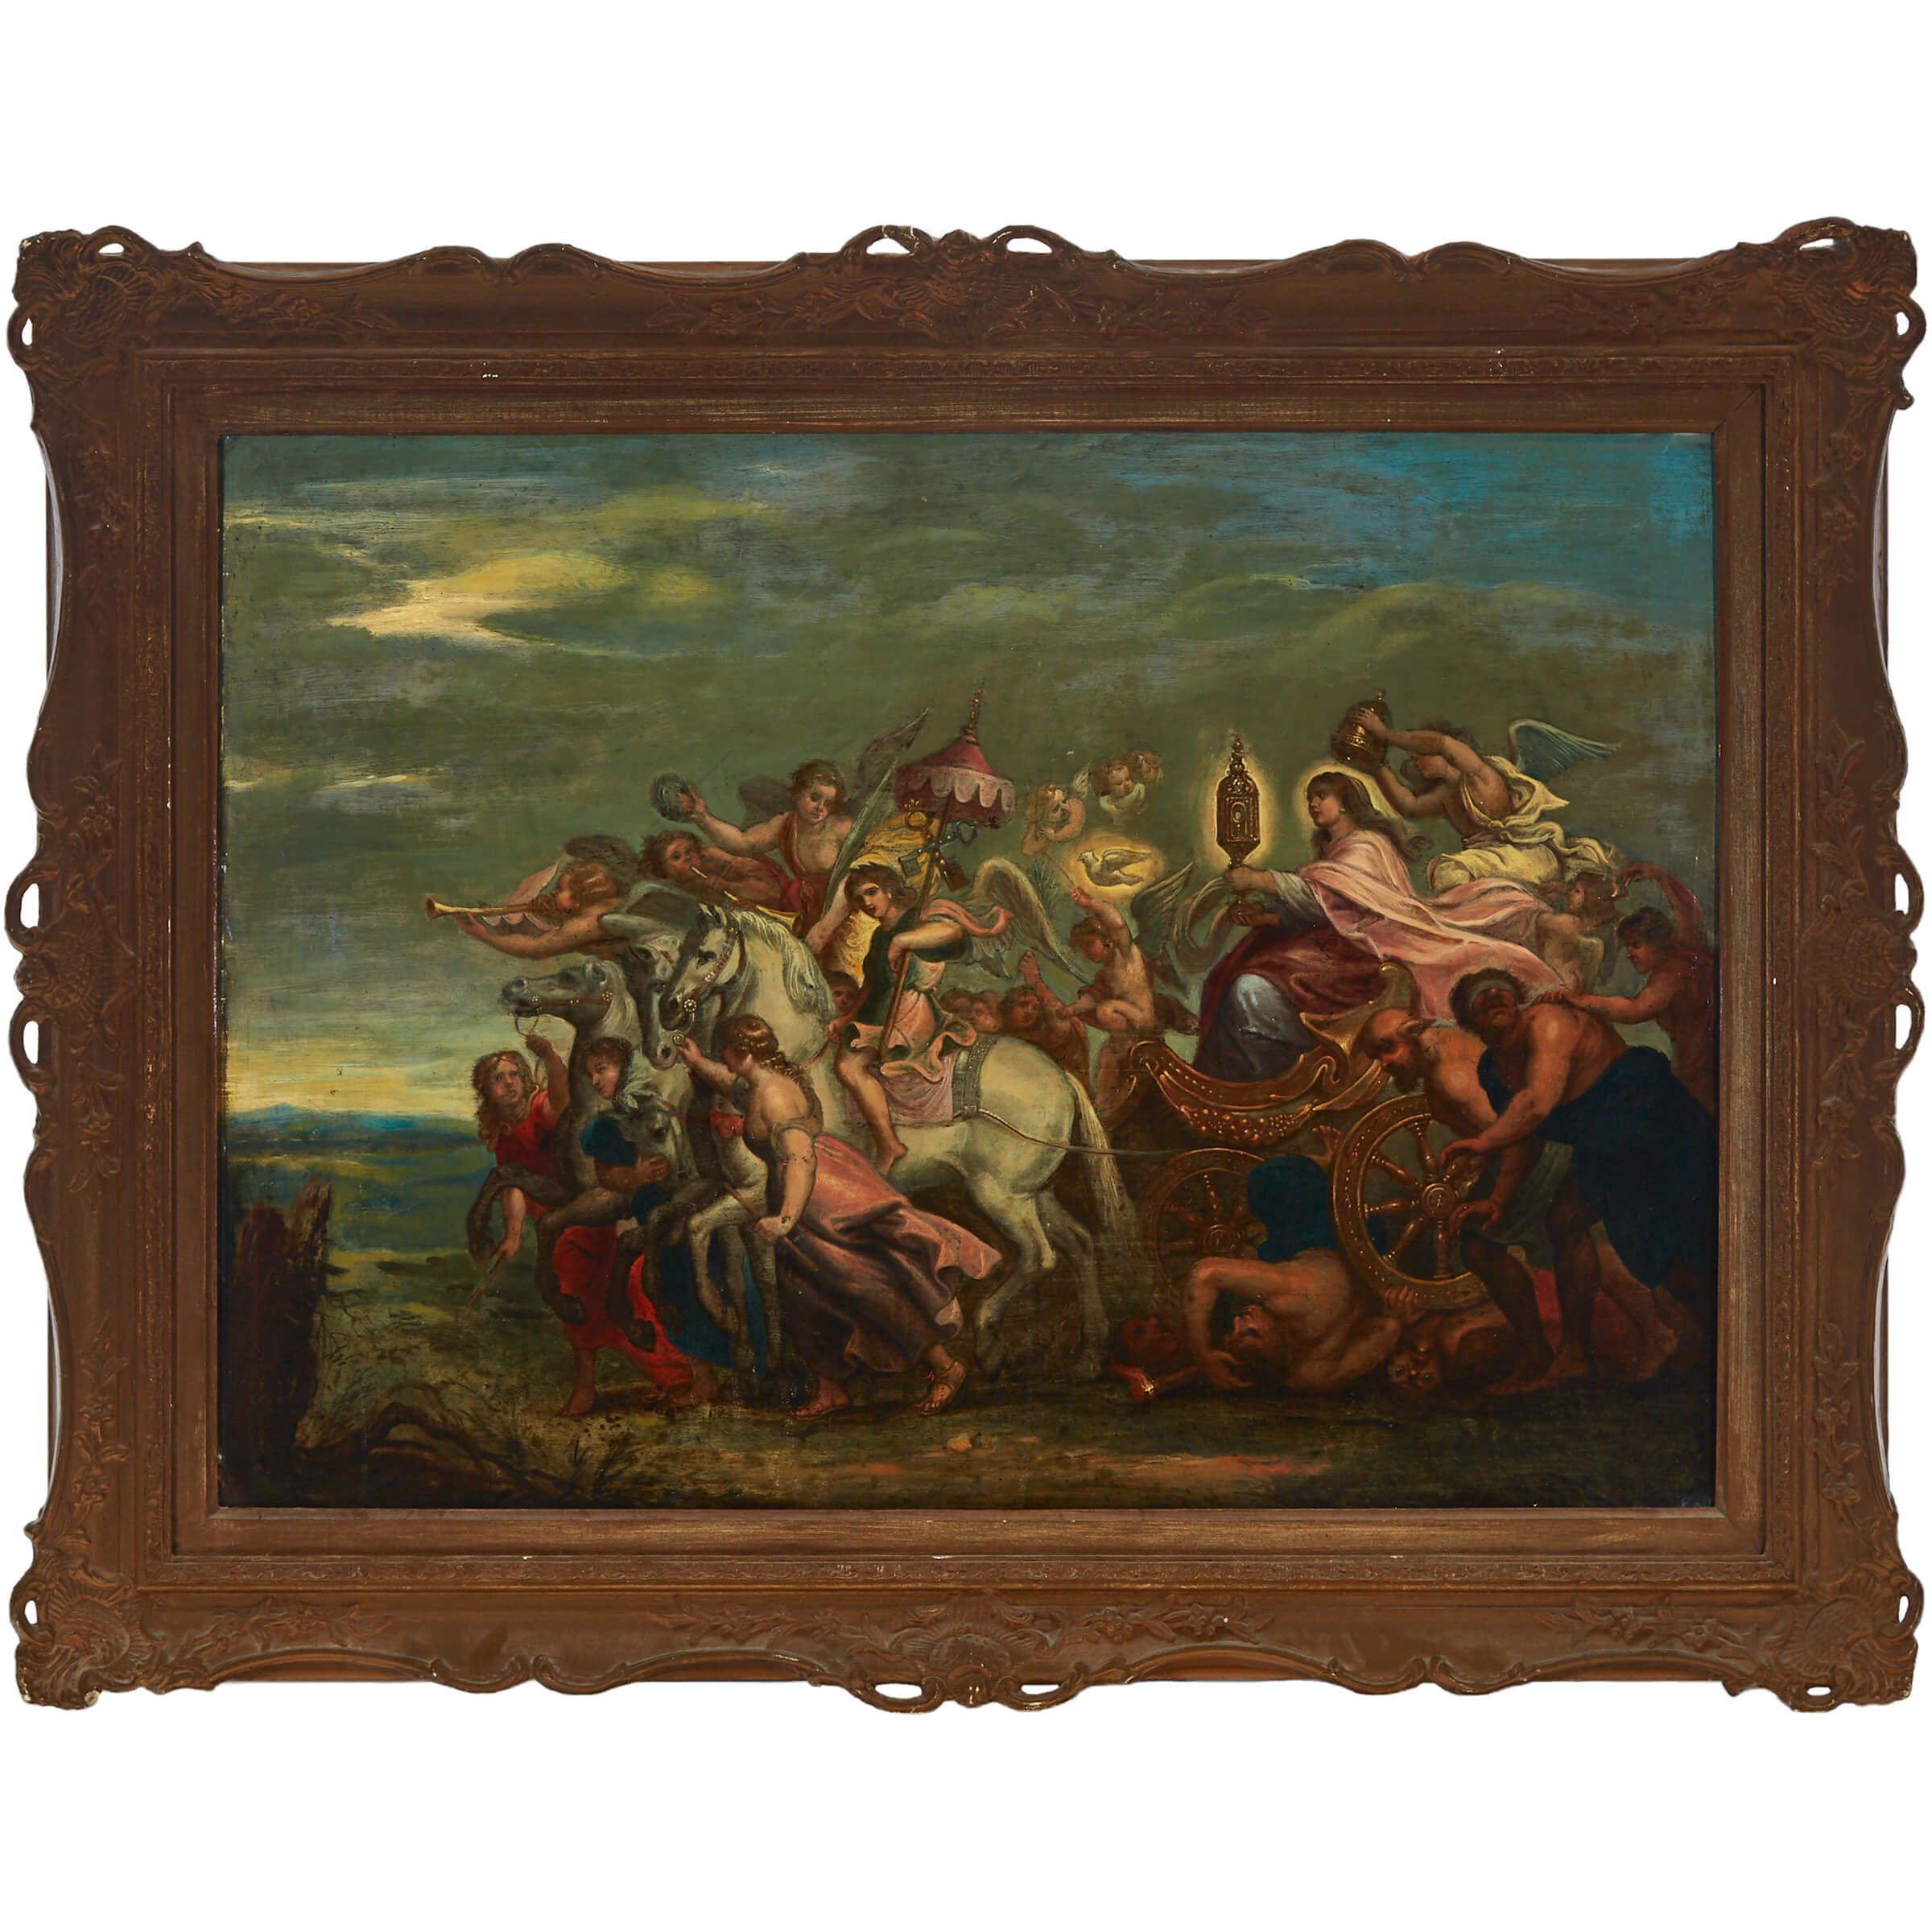 After Peter Paul Rubens (1577-1640), Flemish